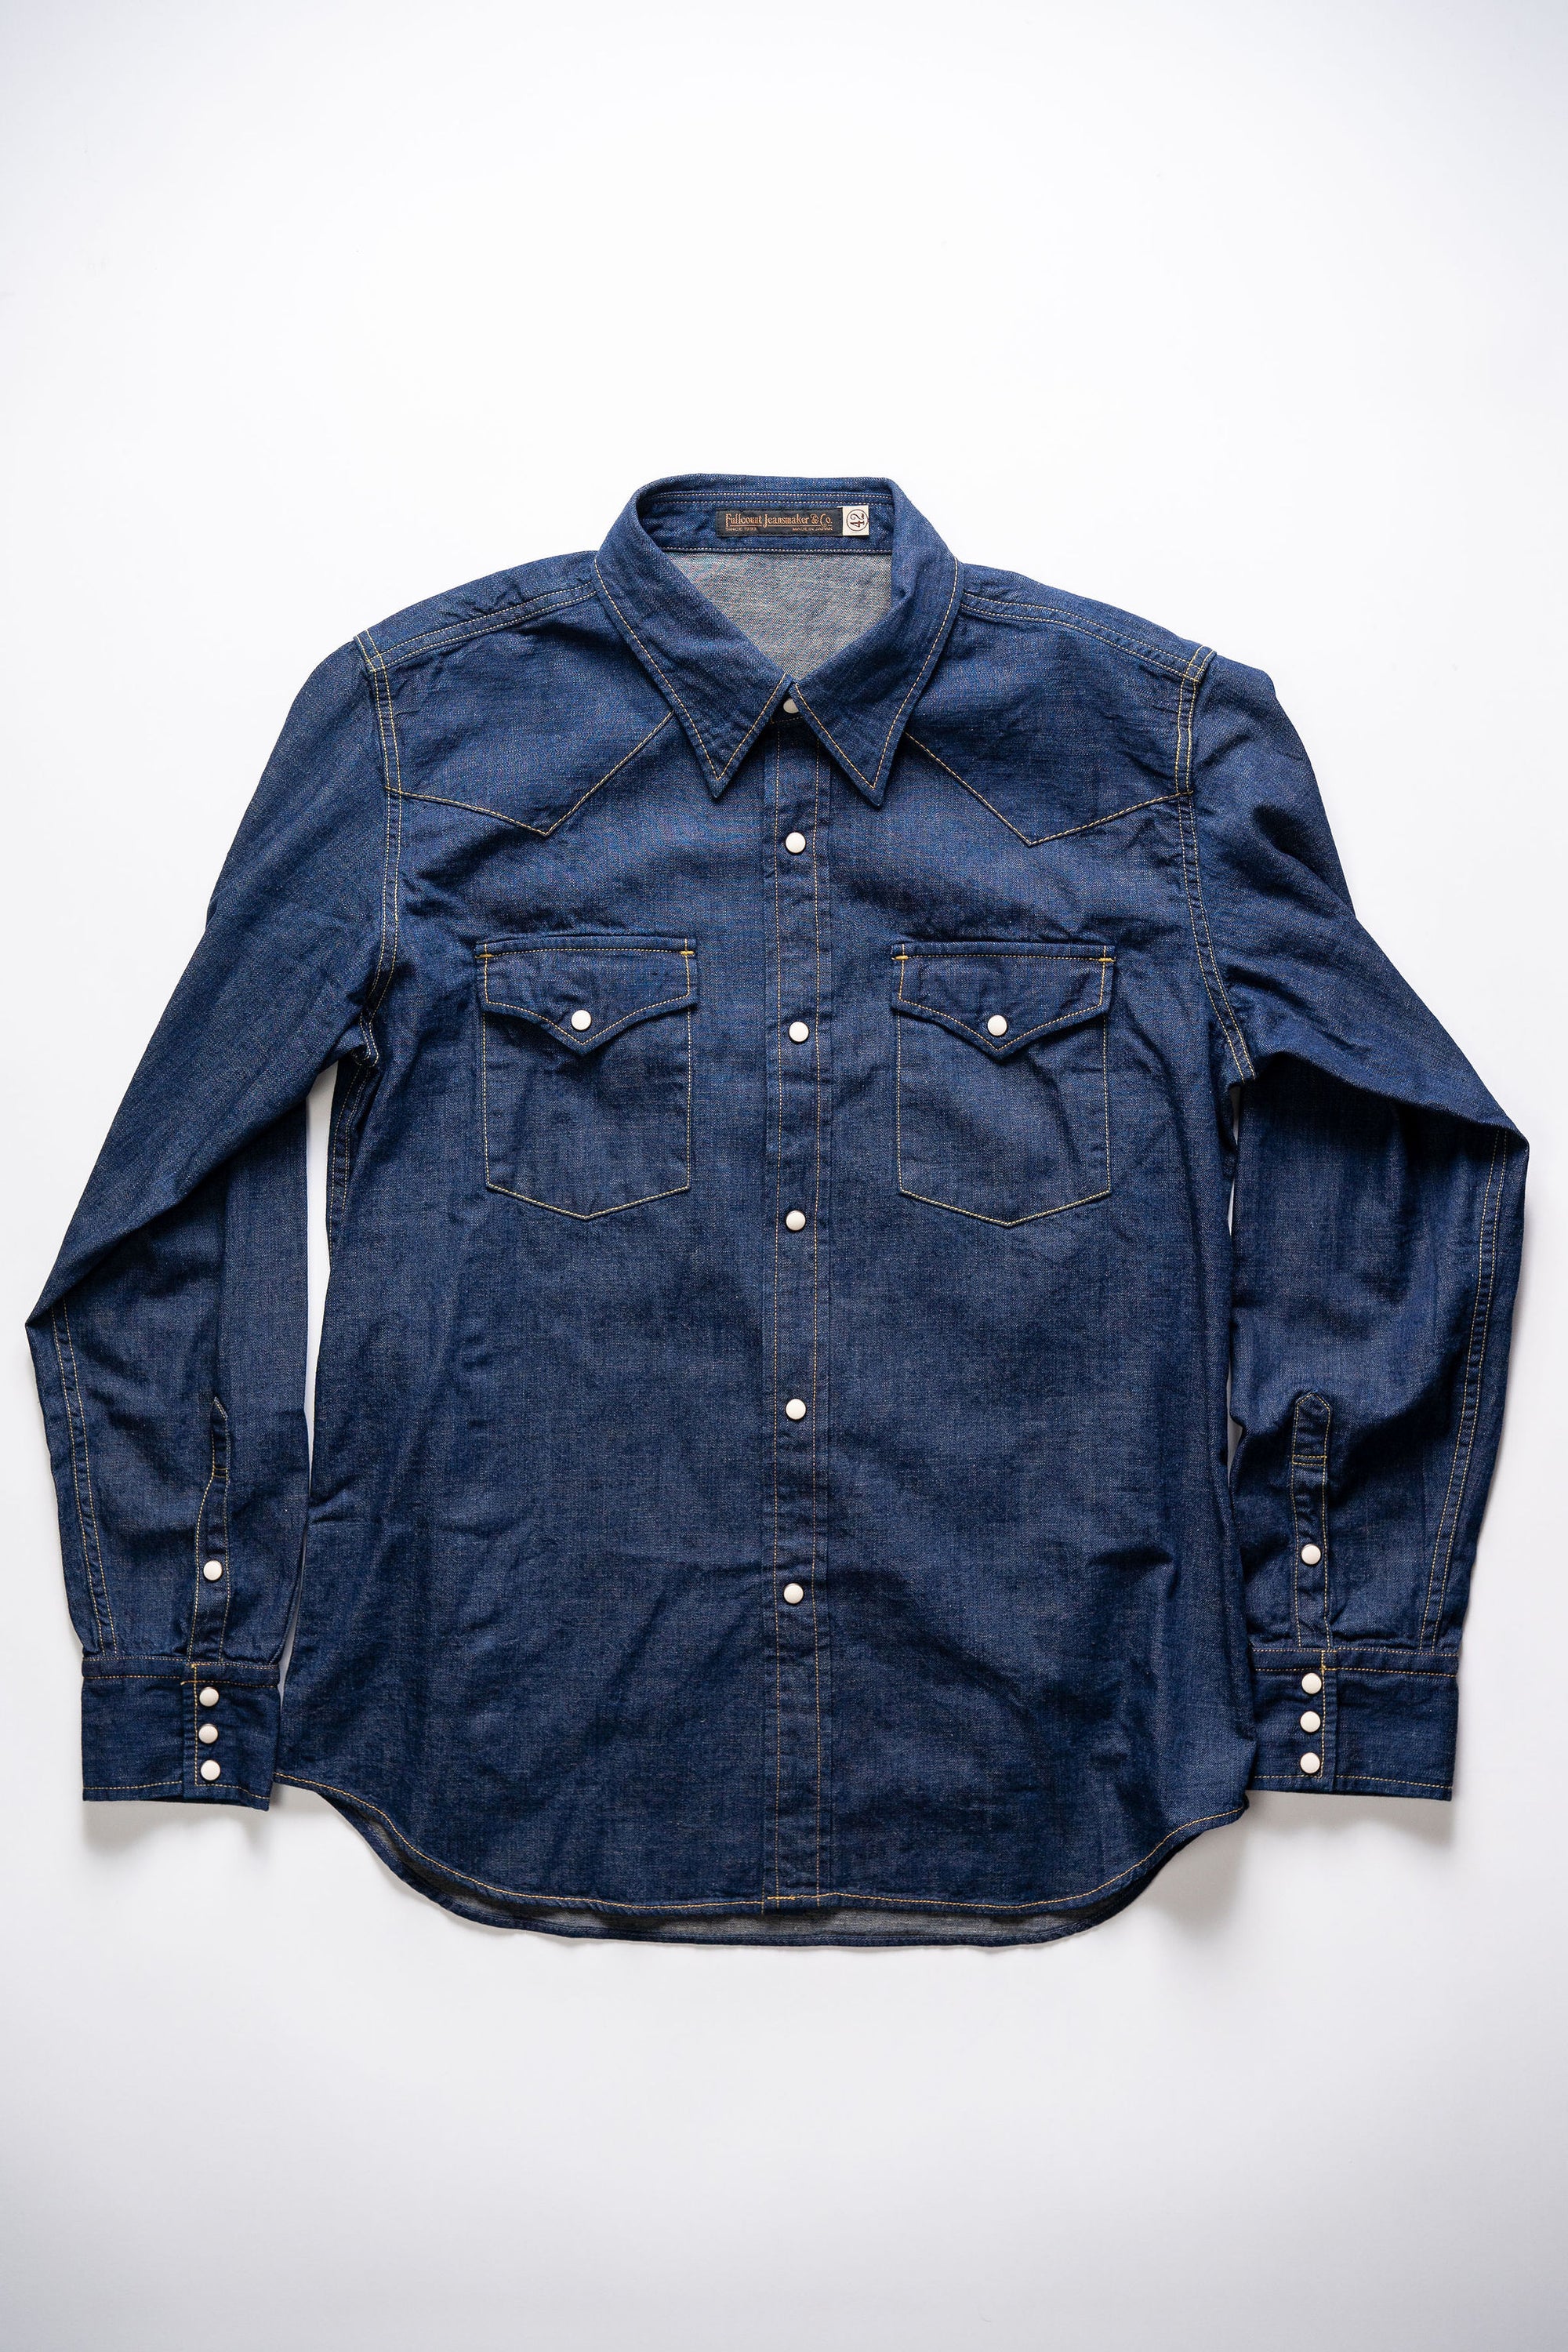 Fullcount 4898 Denim Western Shirt - Indigo Blue